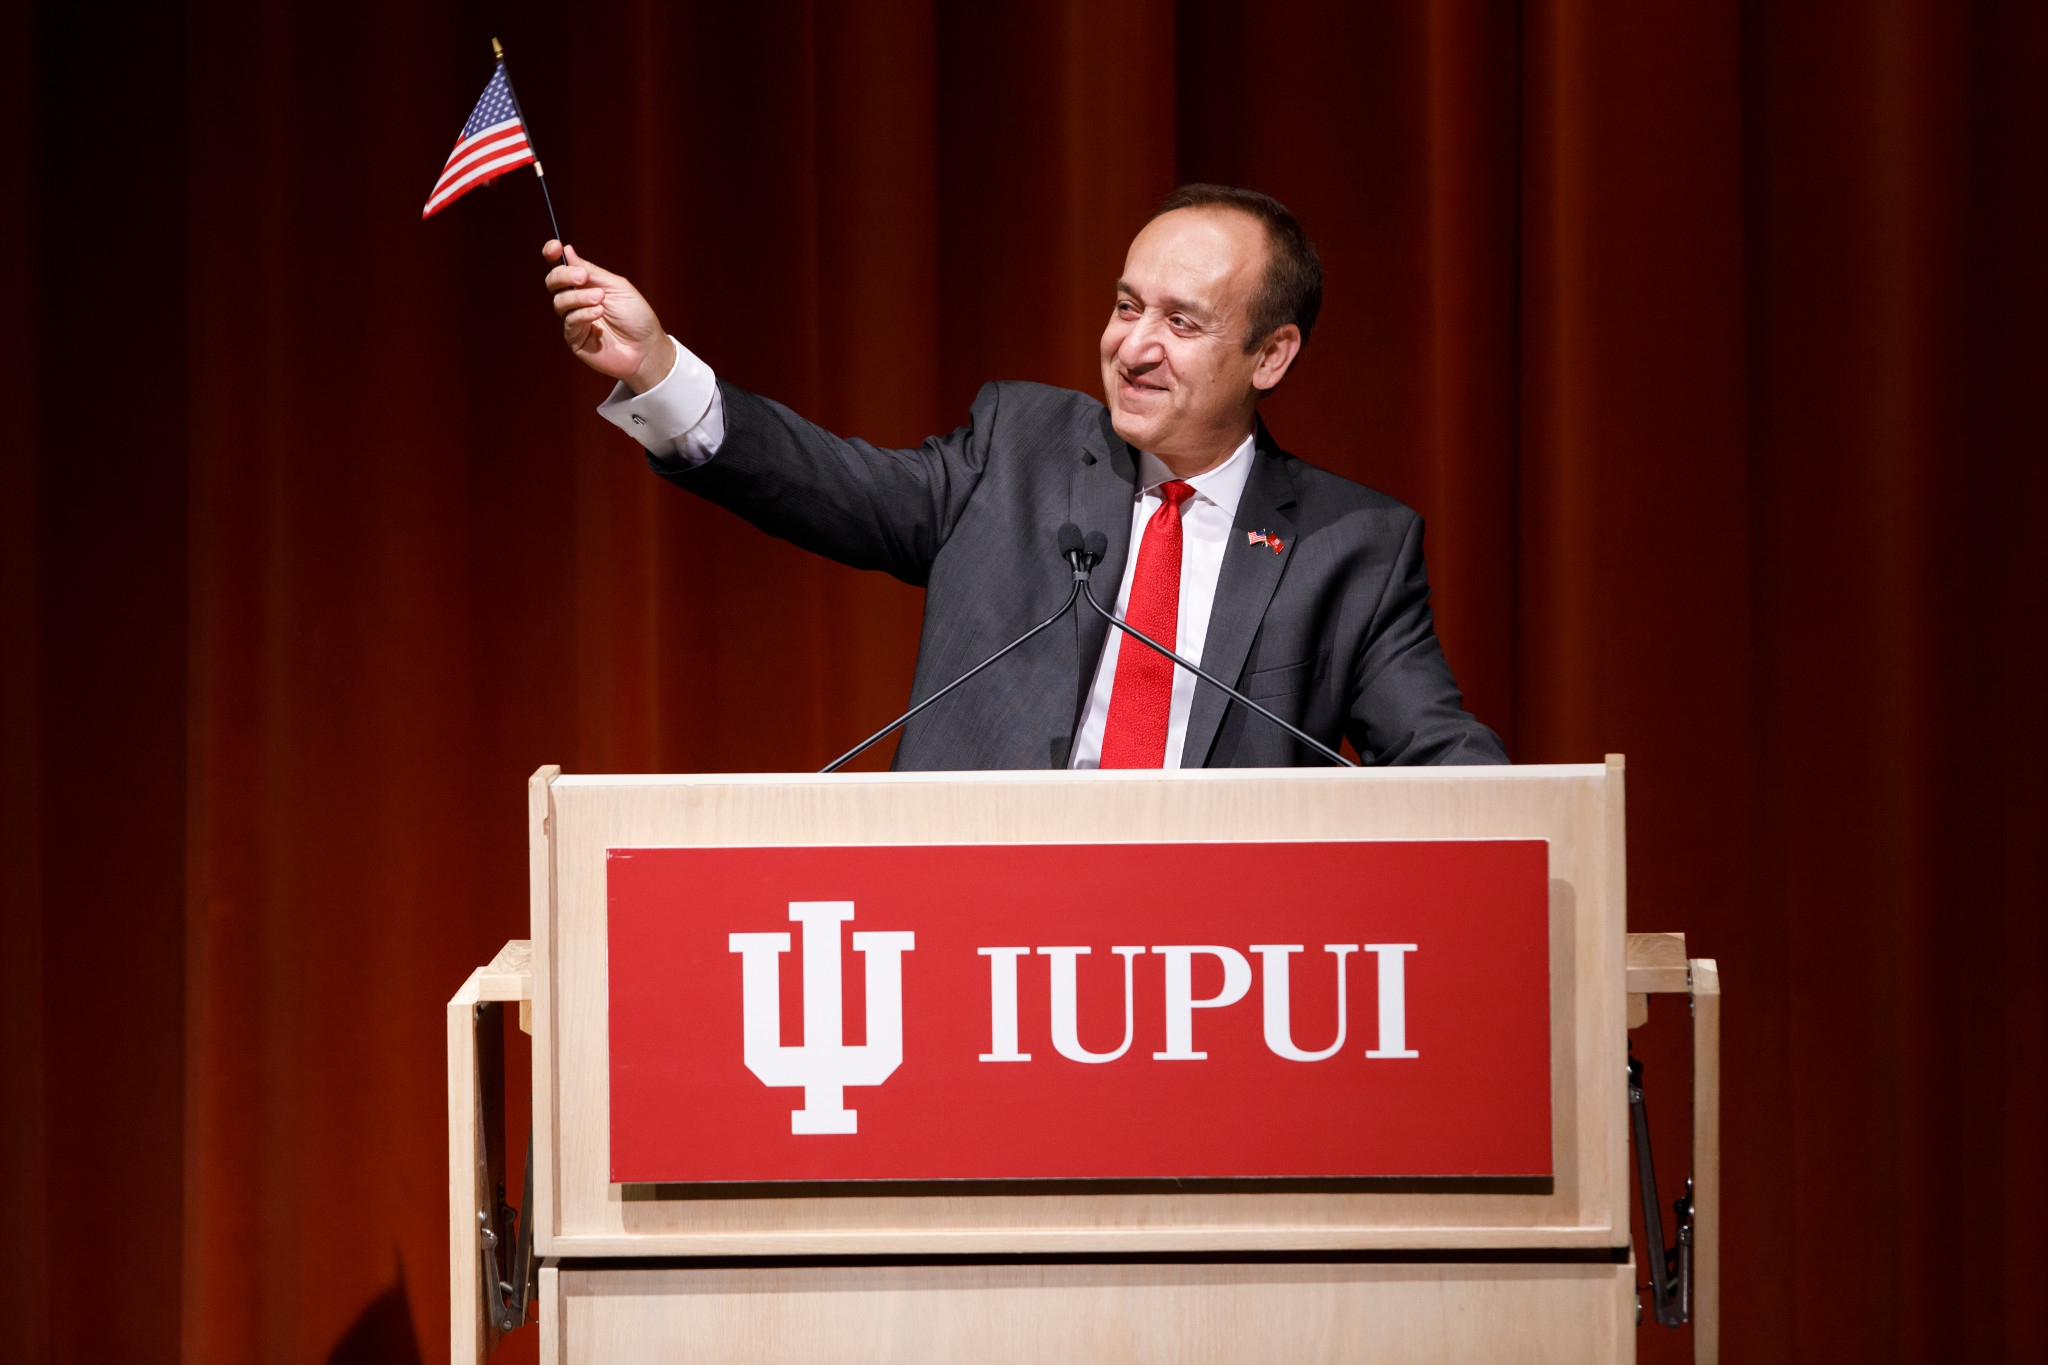 IUPUI Chancellor Nasser Paydar waves a mini American flag at a podium